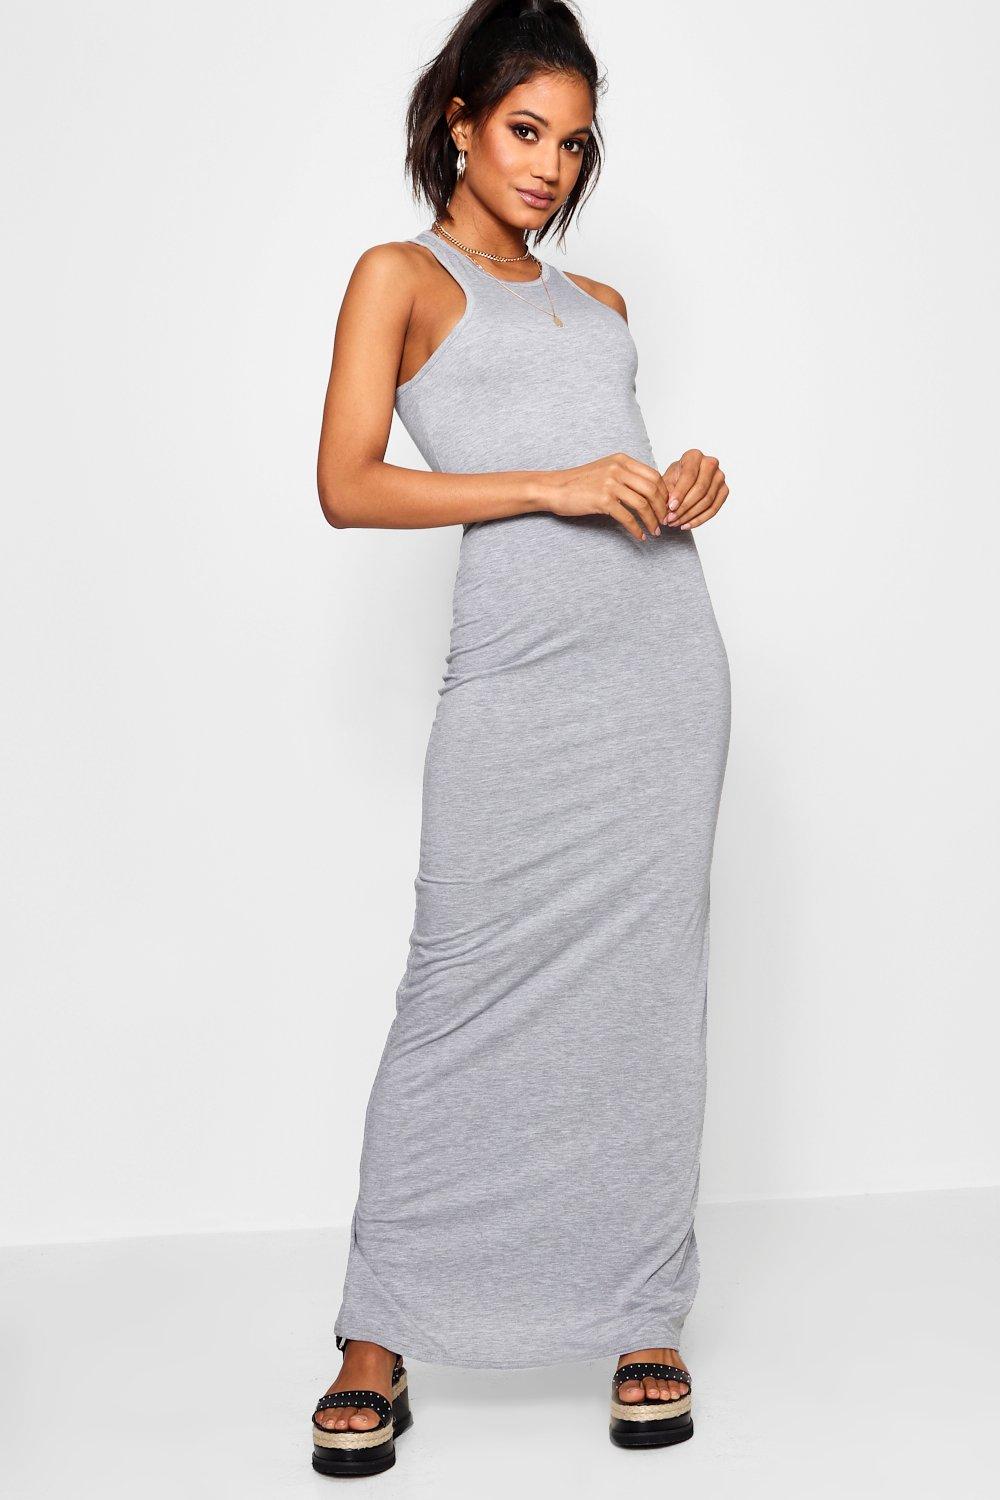 grey casual dress